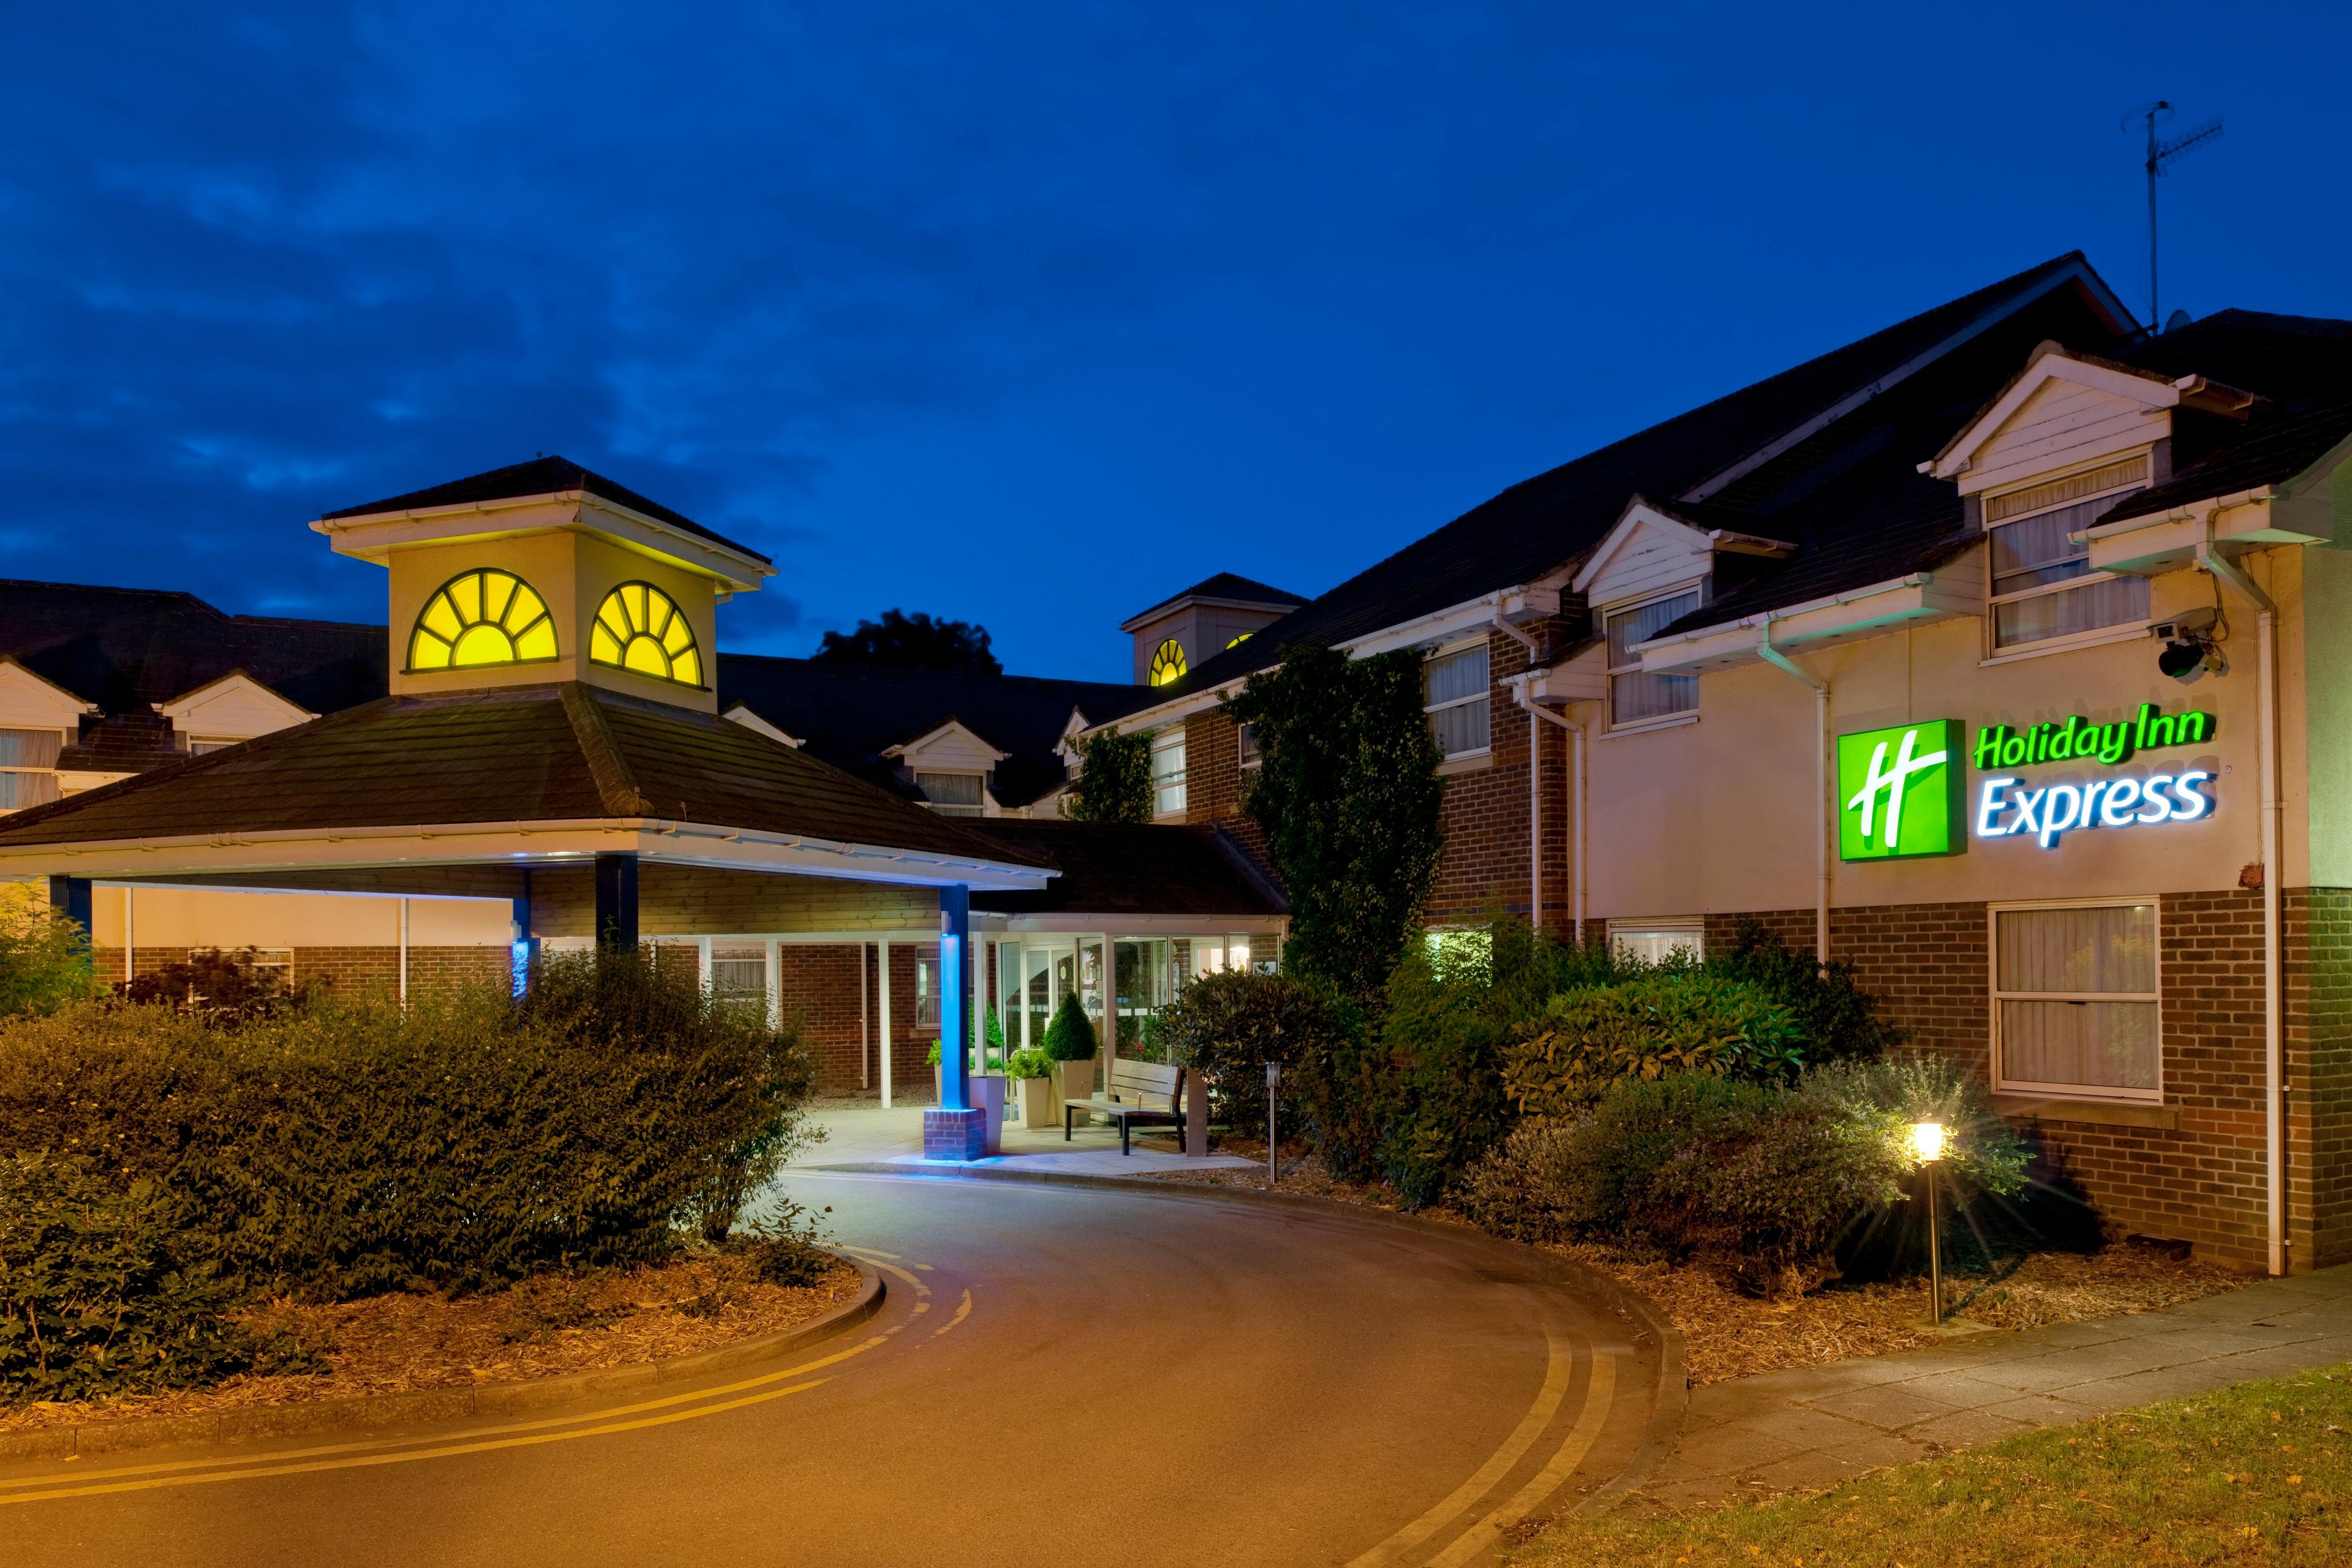 Holiday Inn Express in York, United Kingdom